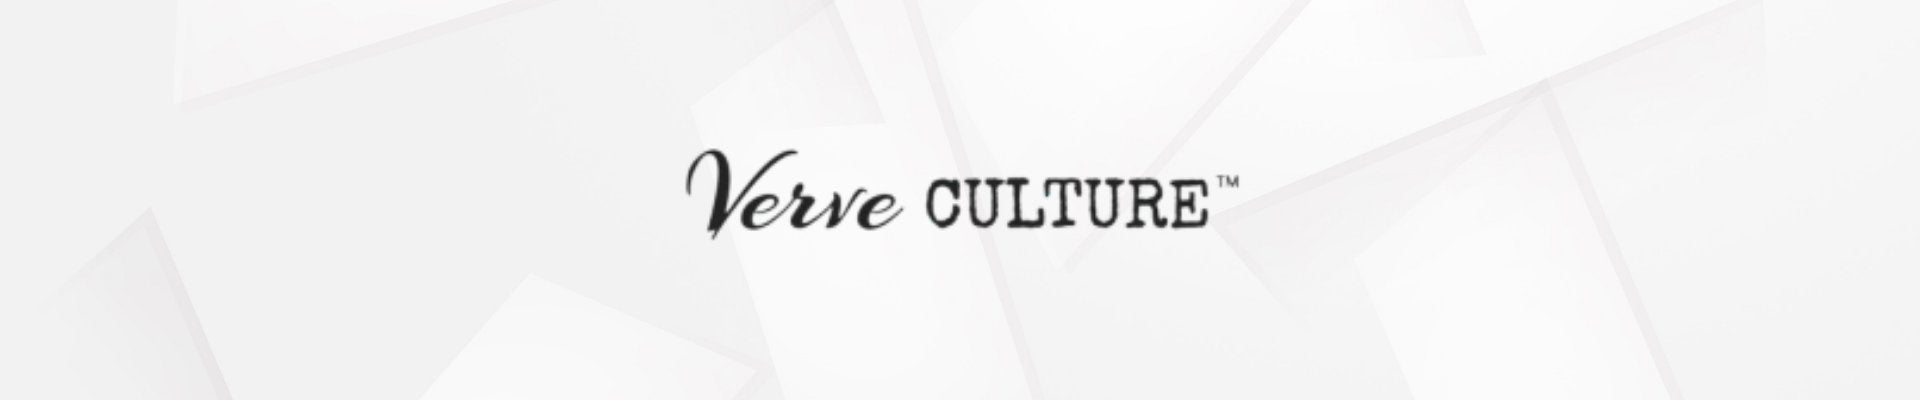 Verve Culture - Food & Drink